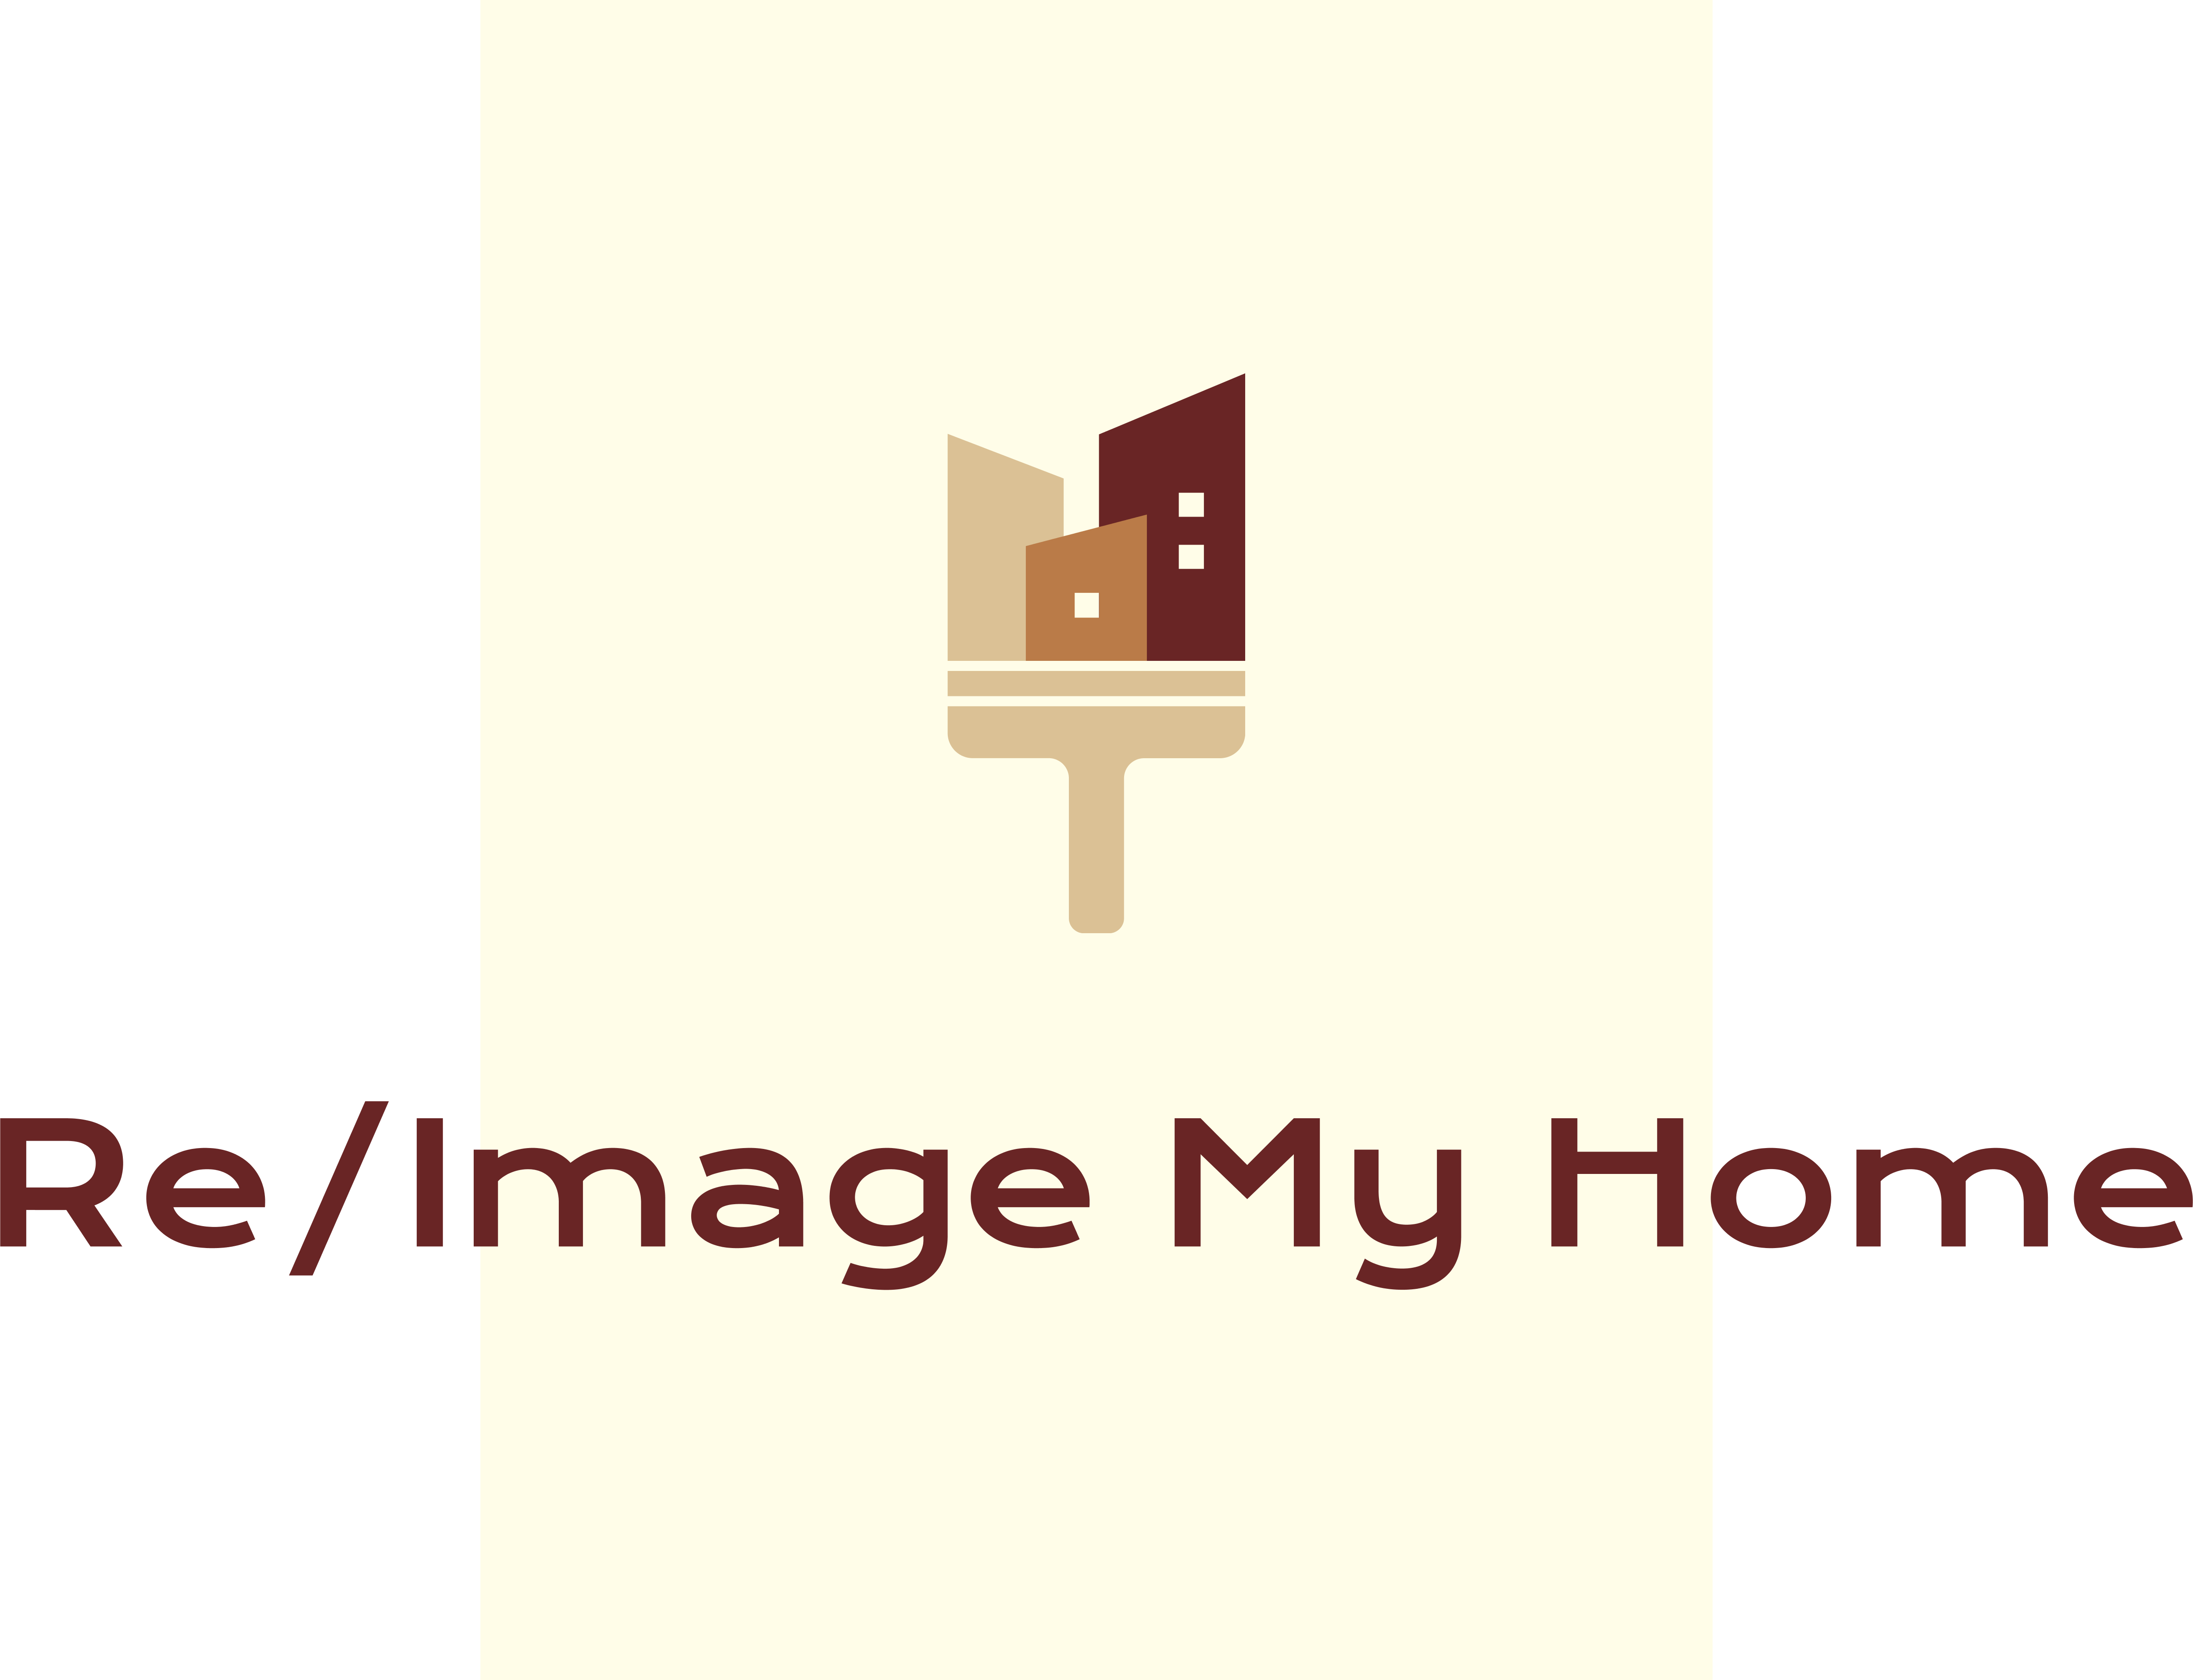 Reimage My Home Logo